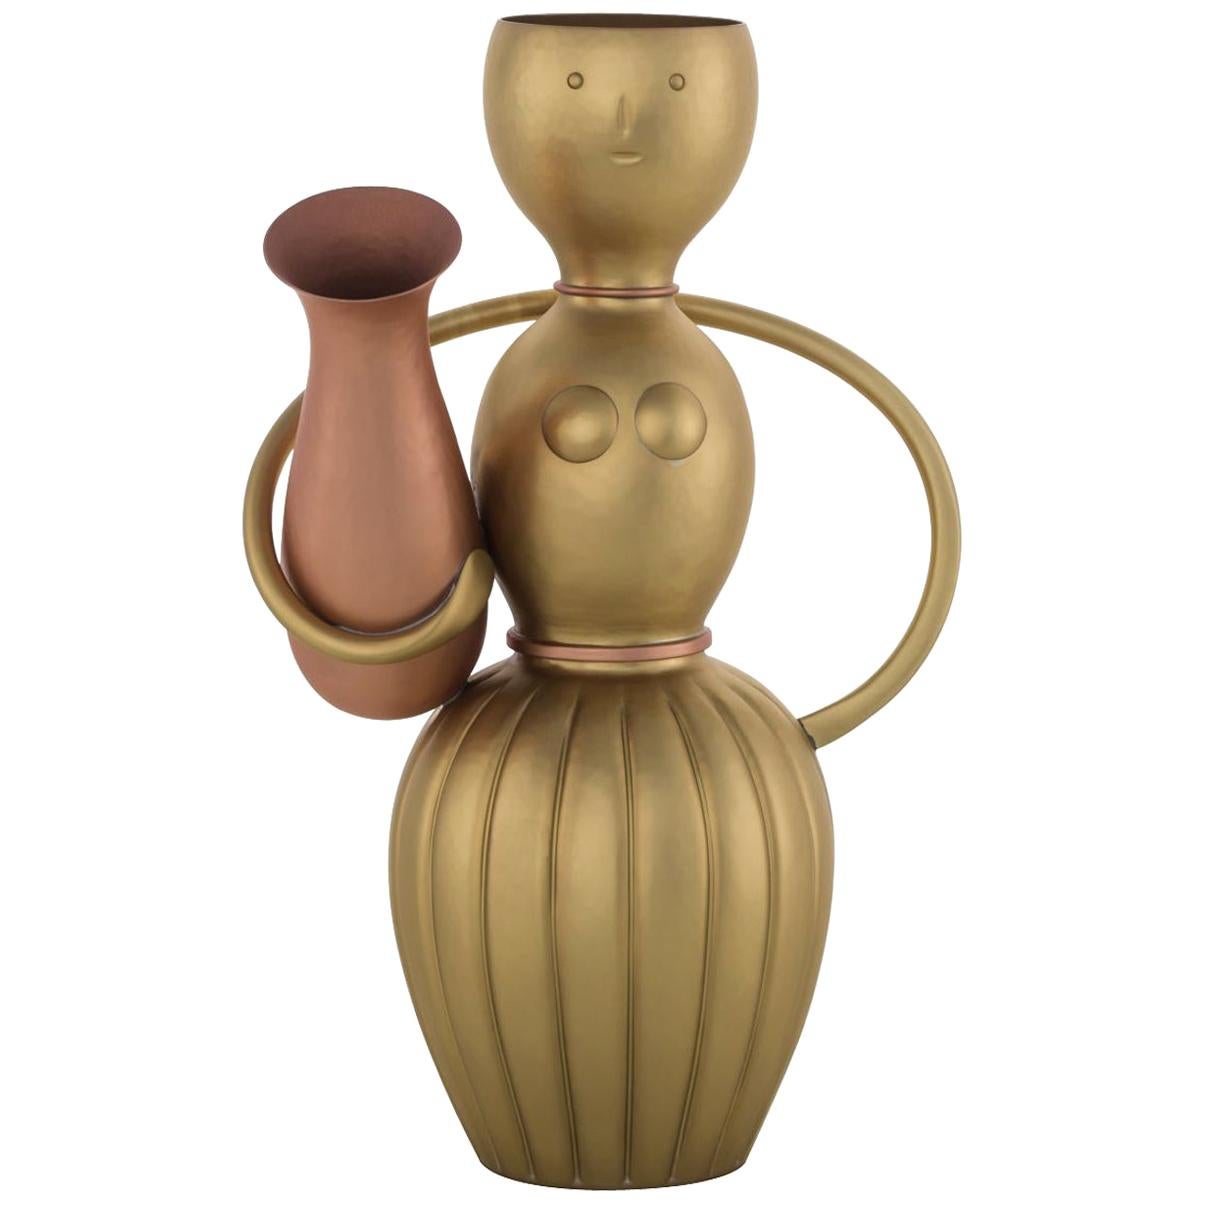 Pablita Sculptural Vase by Zanetto